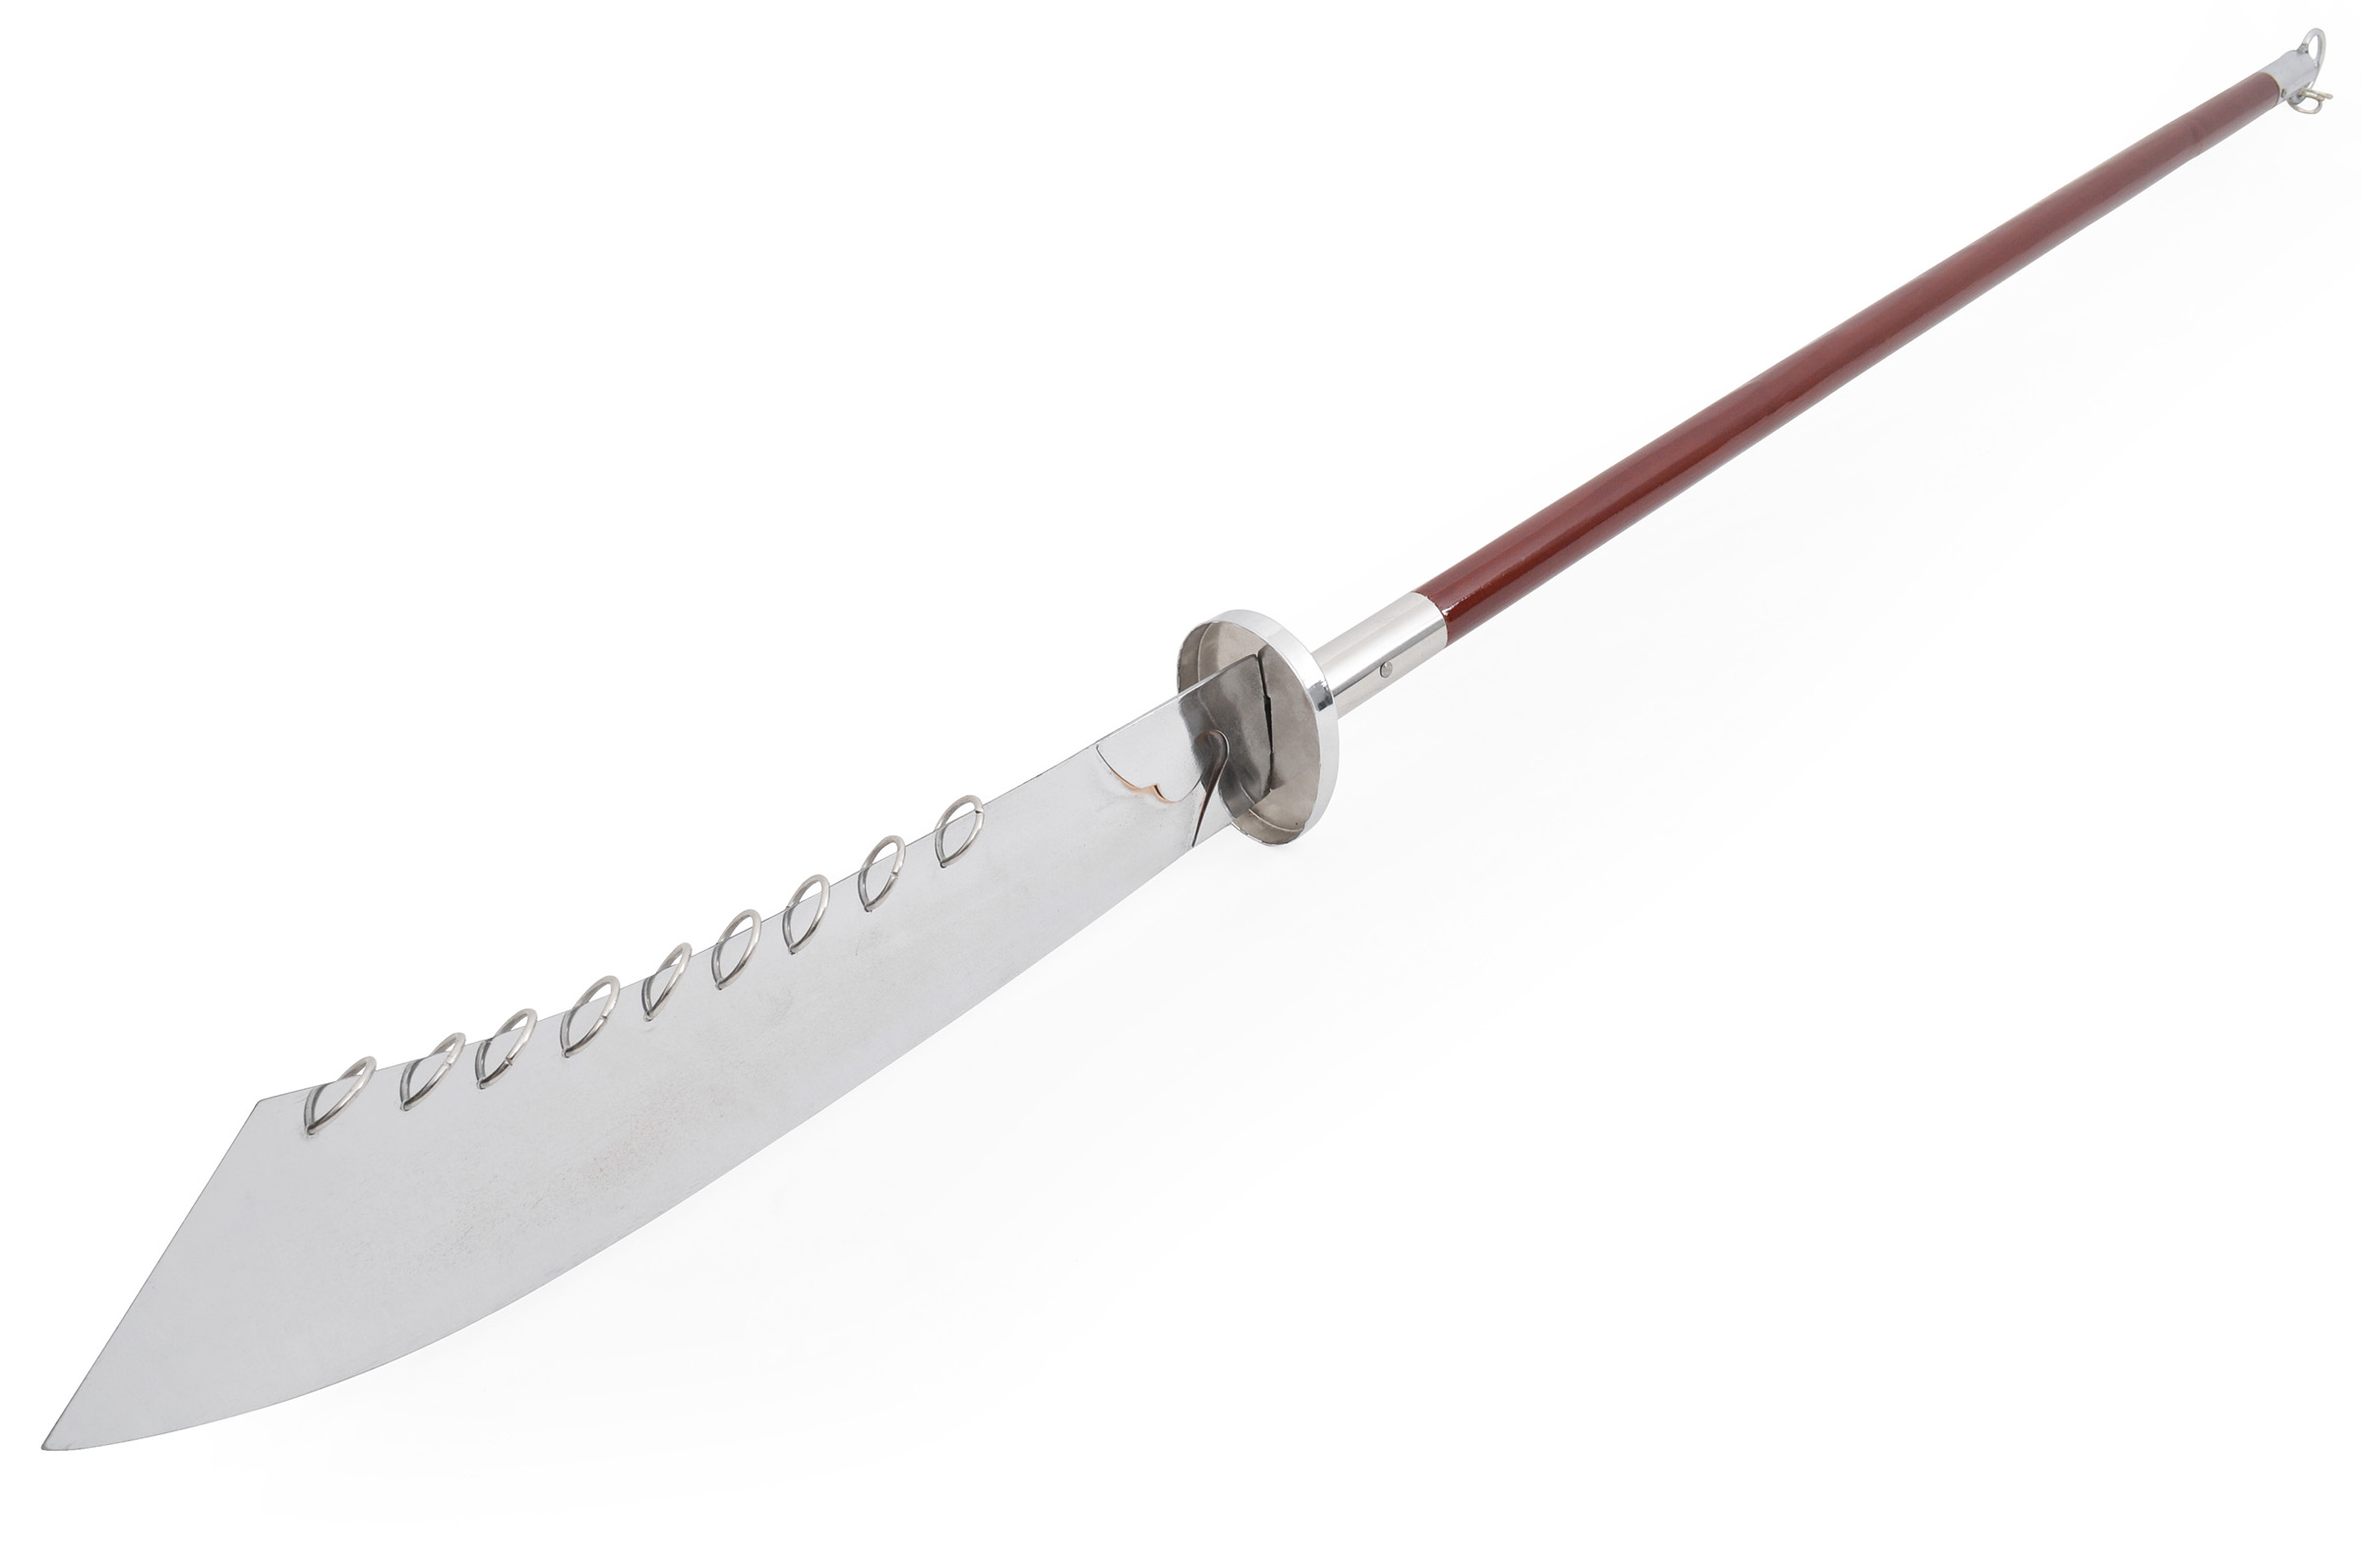 Nine Ring Sword | 9 Ring Sword | Dadao Sword | Survival Island